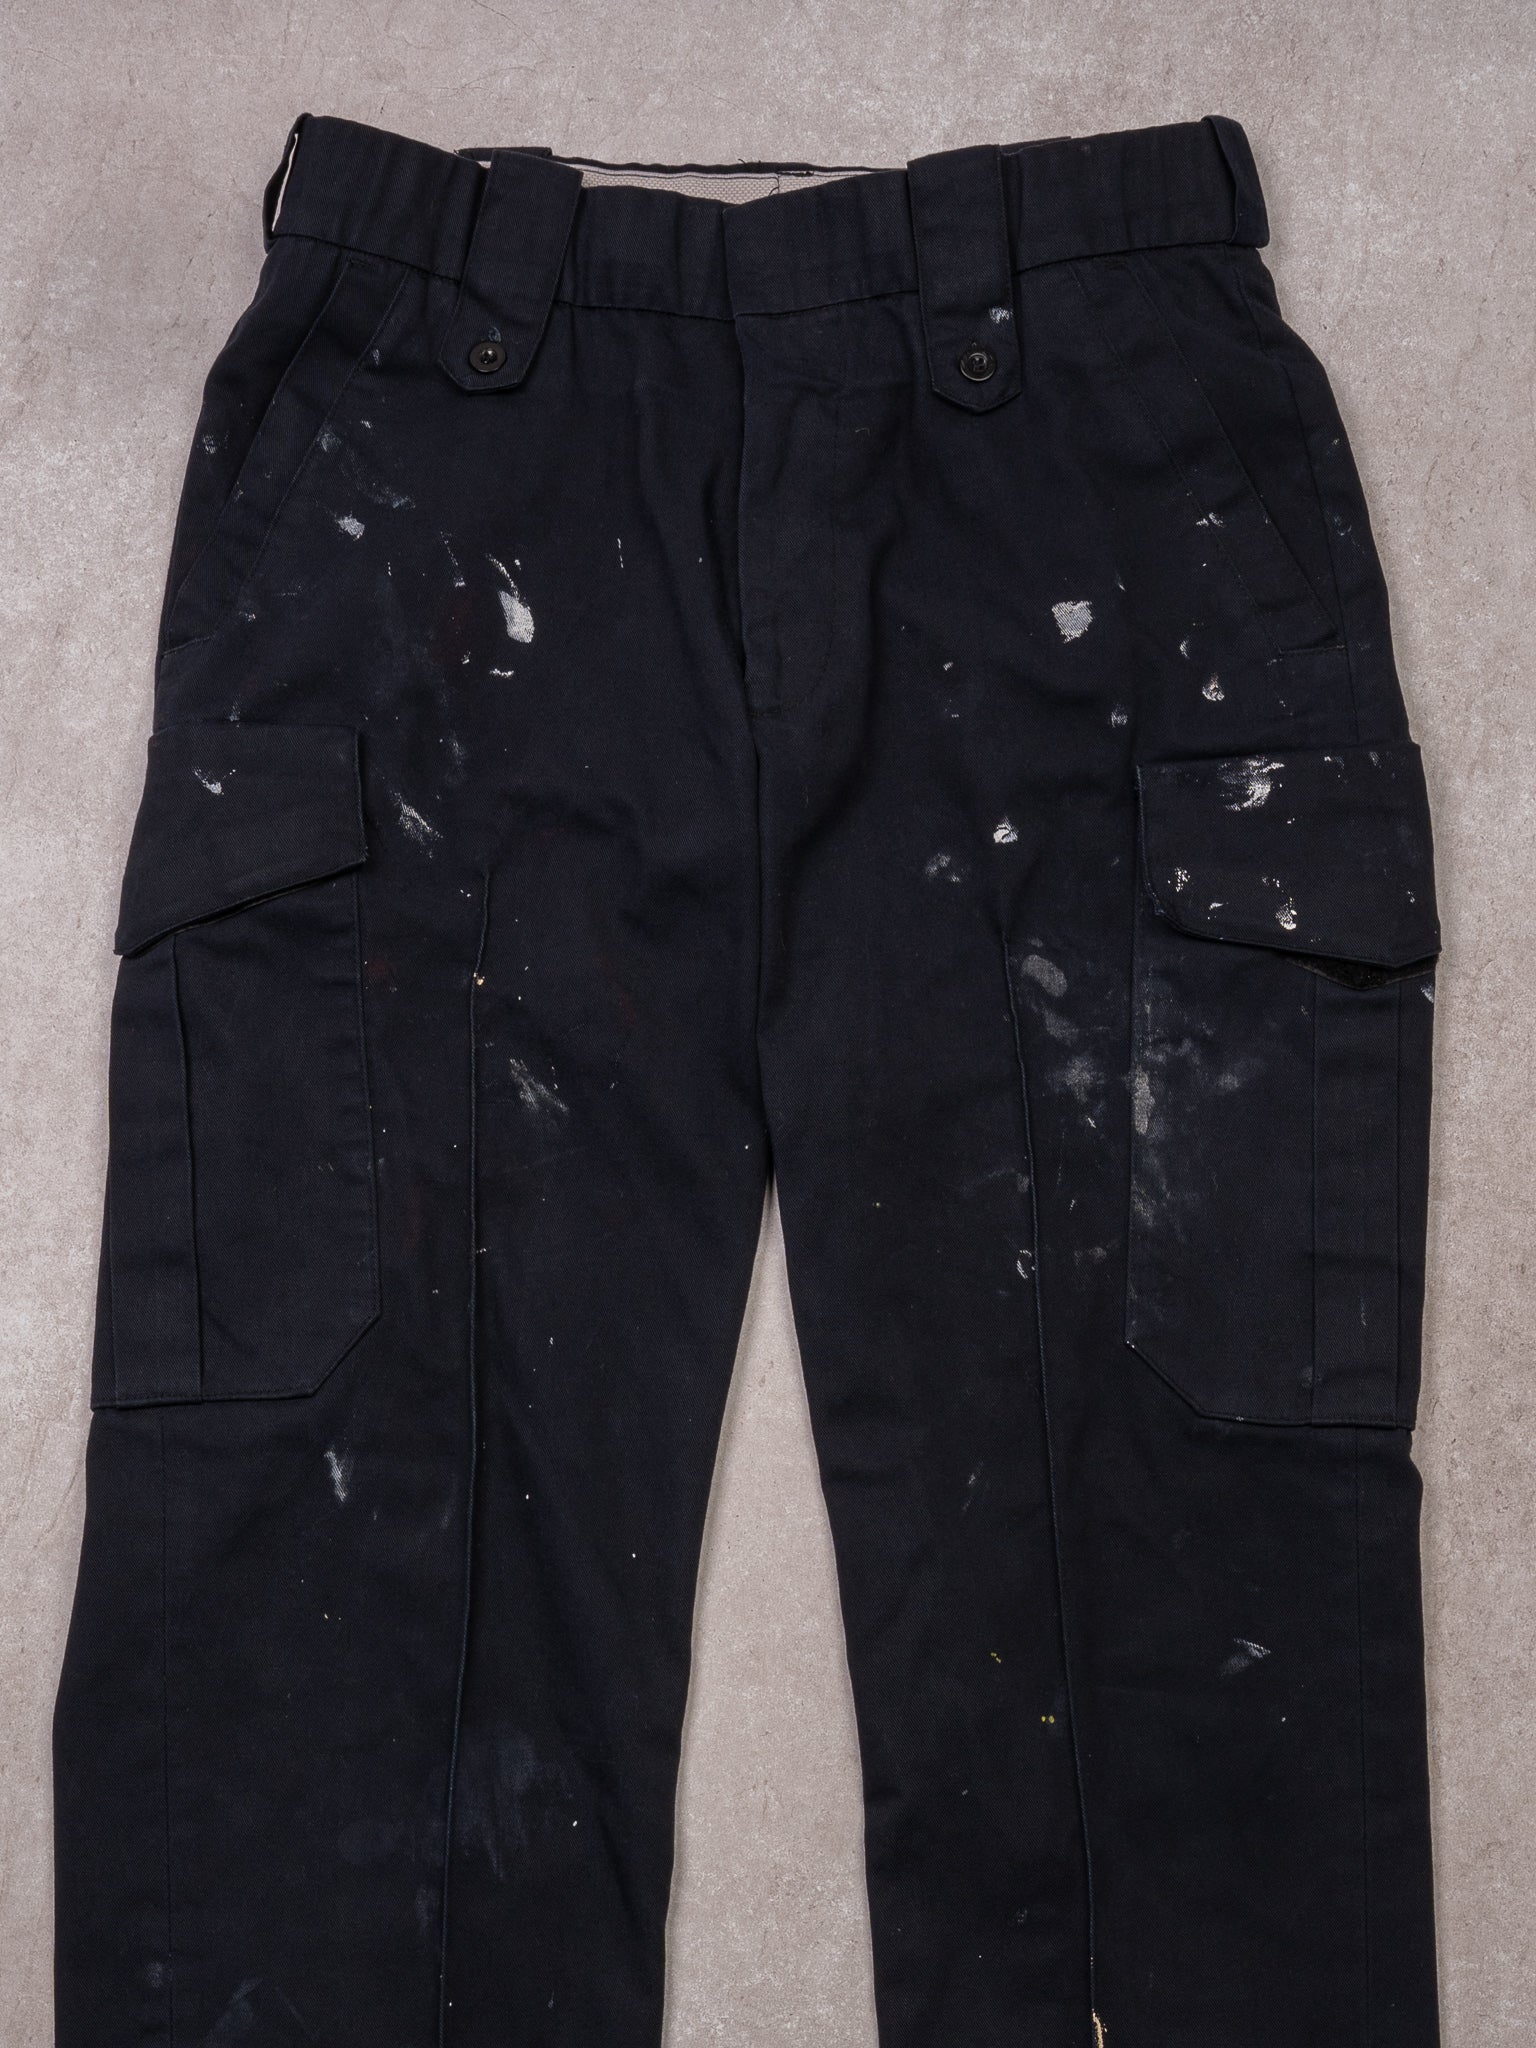 Vintage Dark Blue Ottawa Police Cargo Pants (34 x 32)